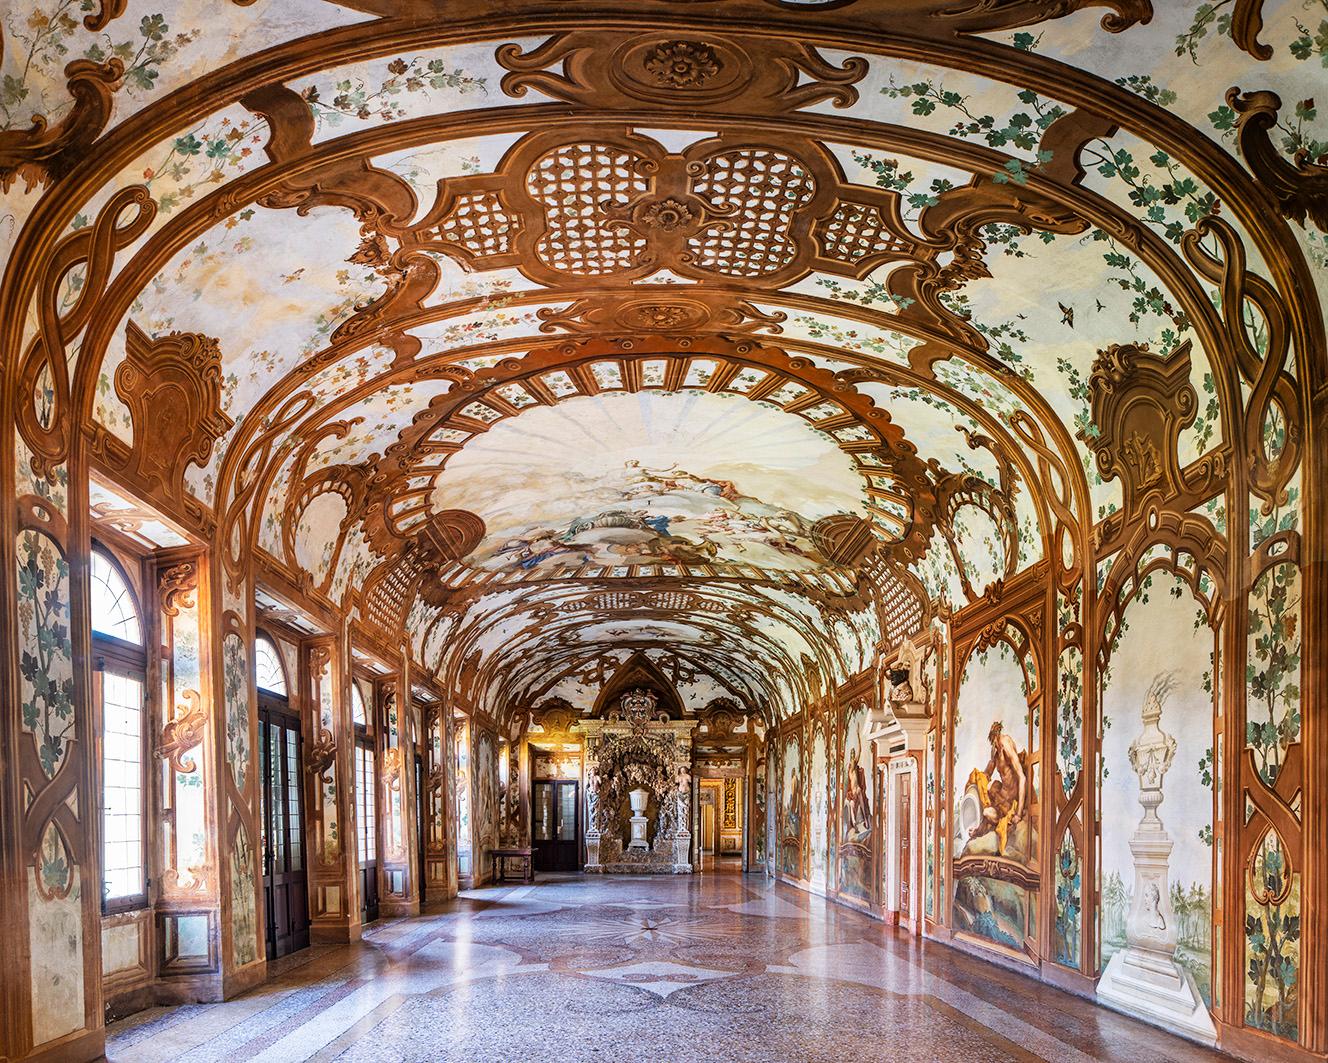 Reinhard Görner Still-Life Photograph - Sala dei Fiumi I (Hall of Rivers), Ducal Palace of Mantua